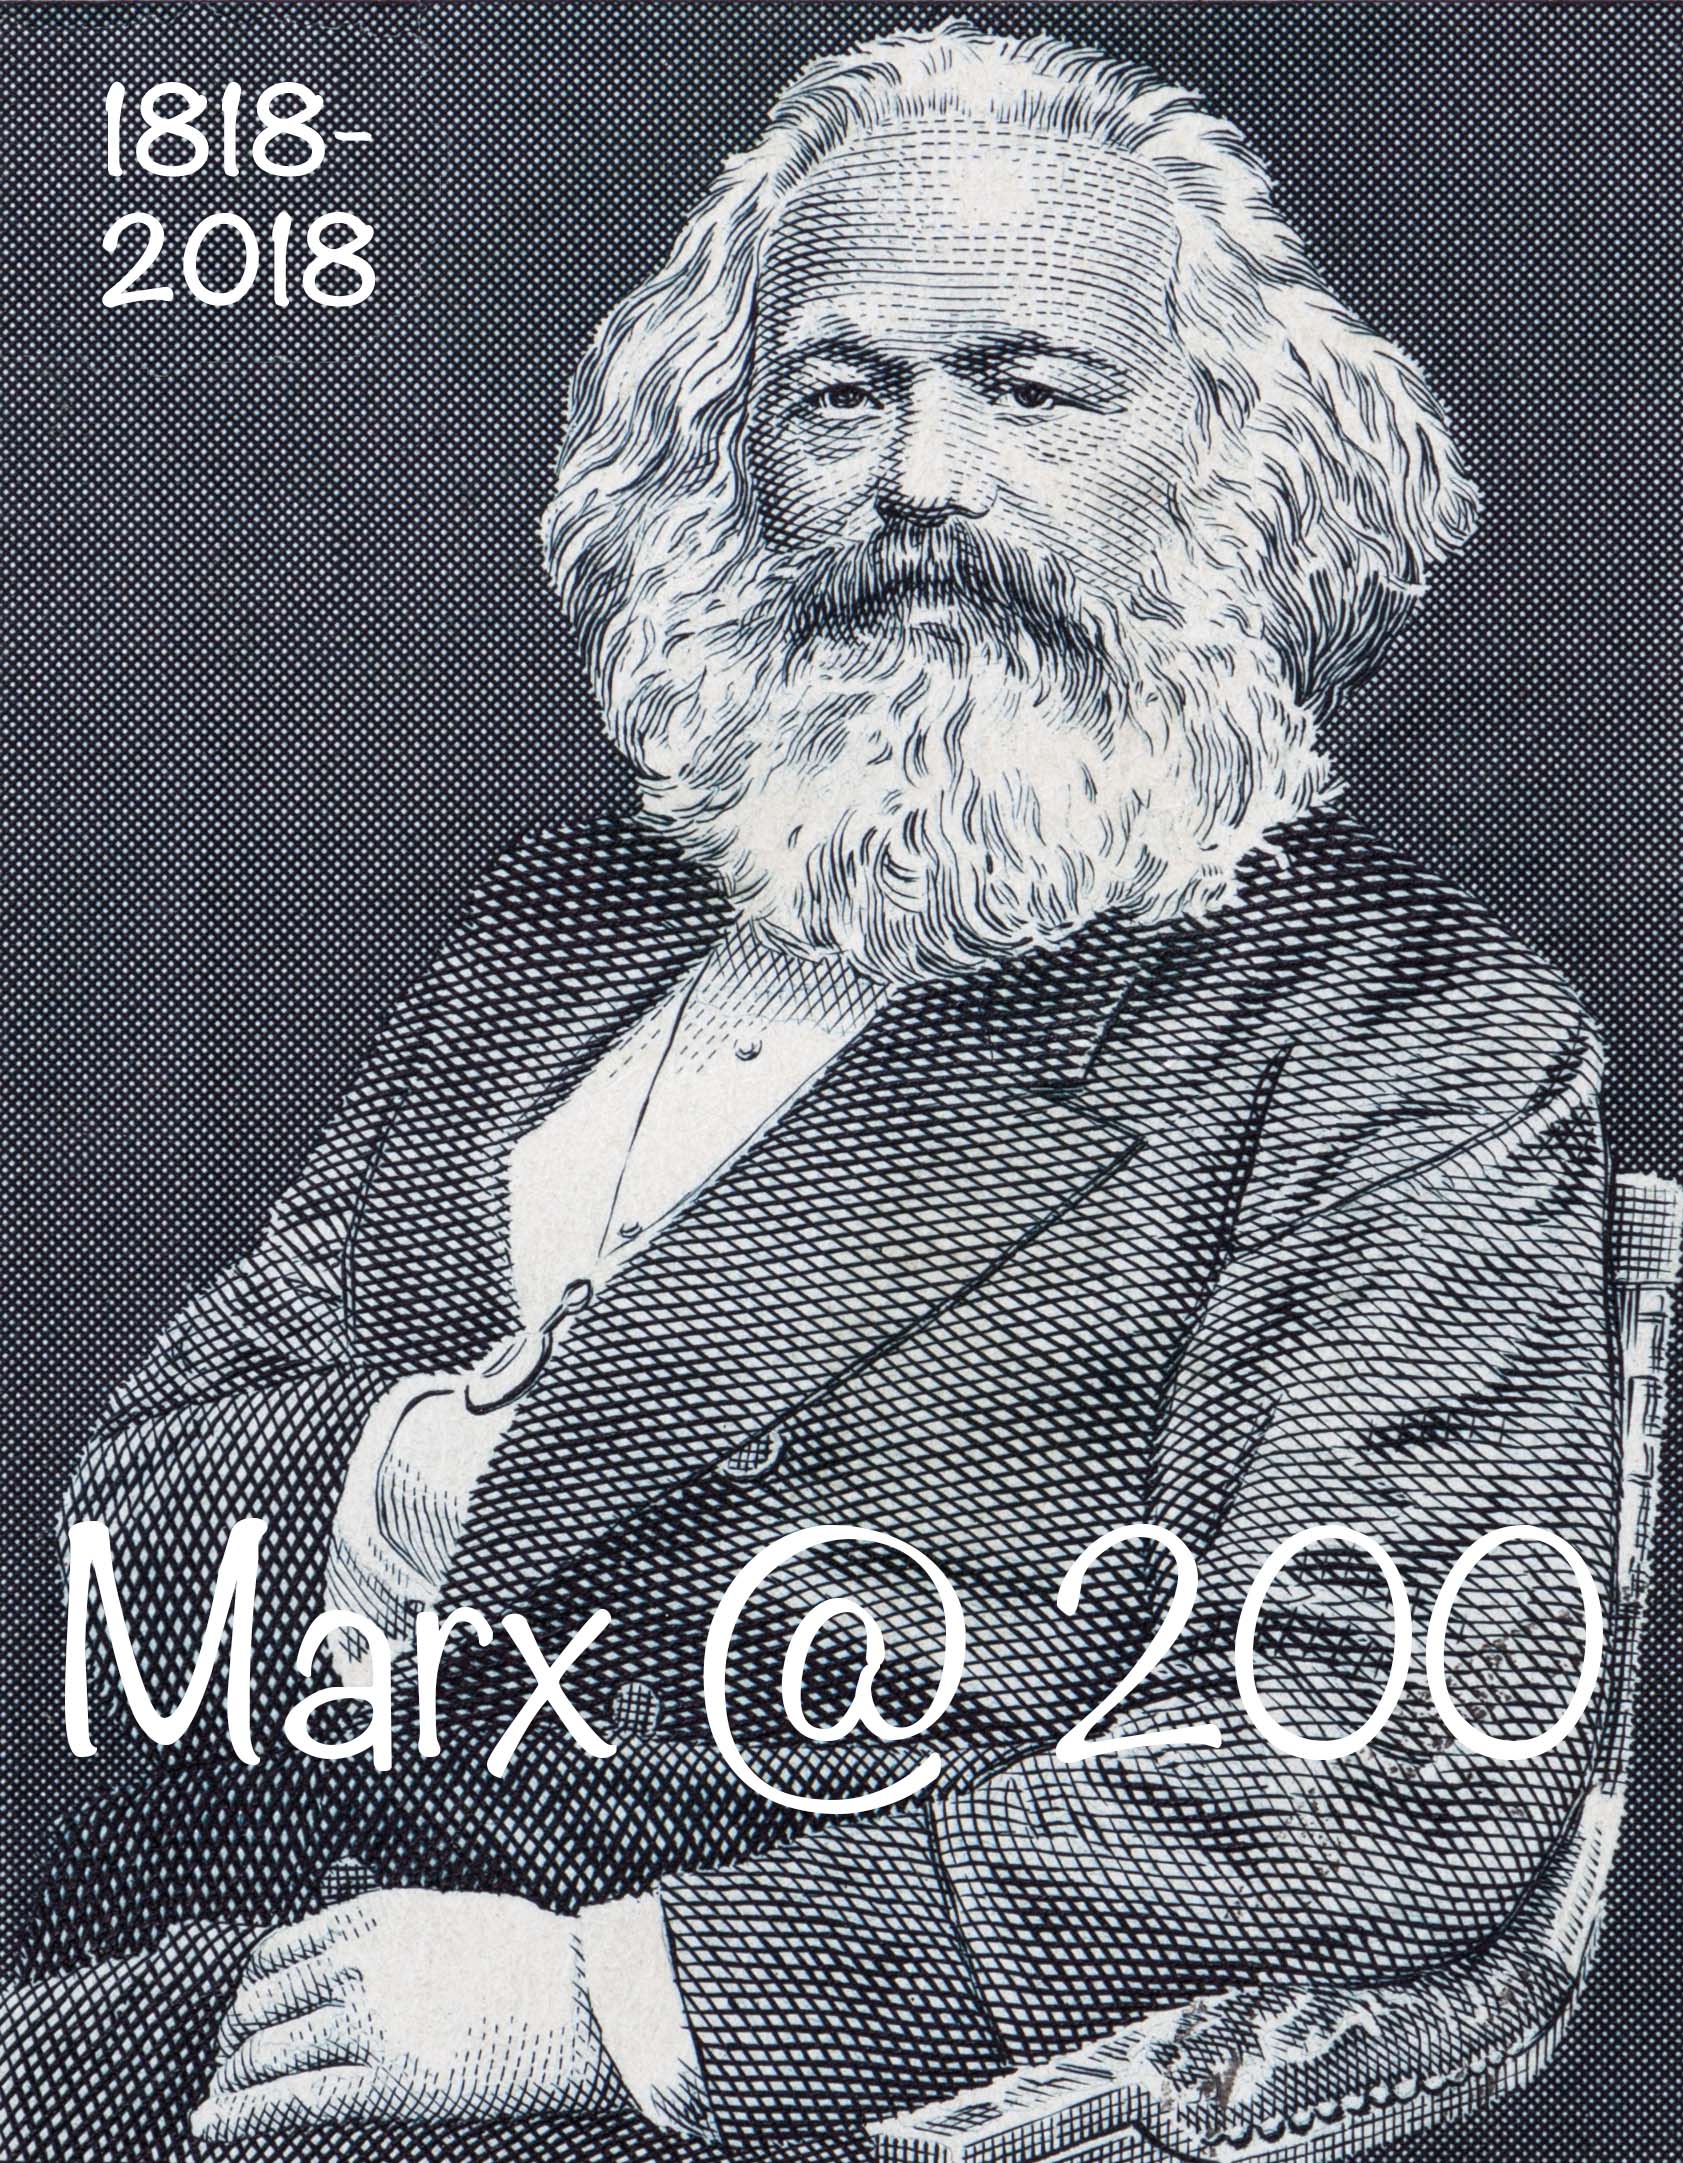 karl marx theory of capitalism pdf